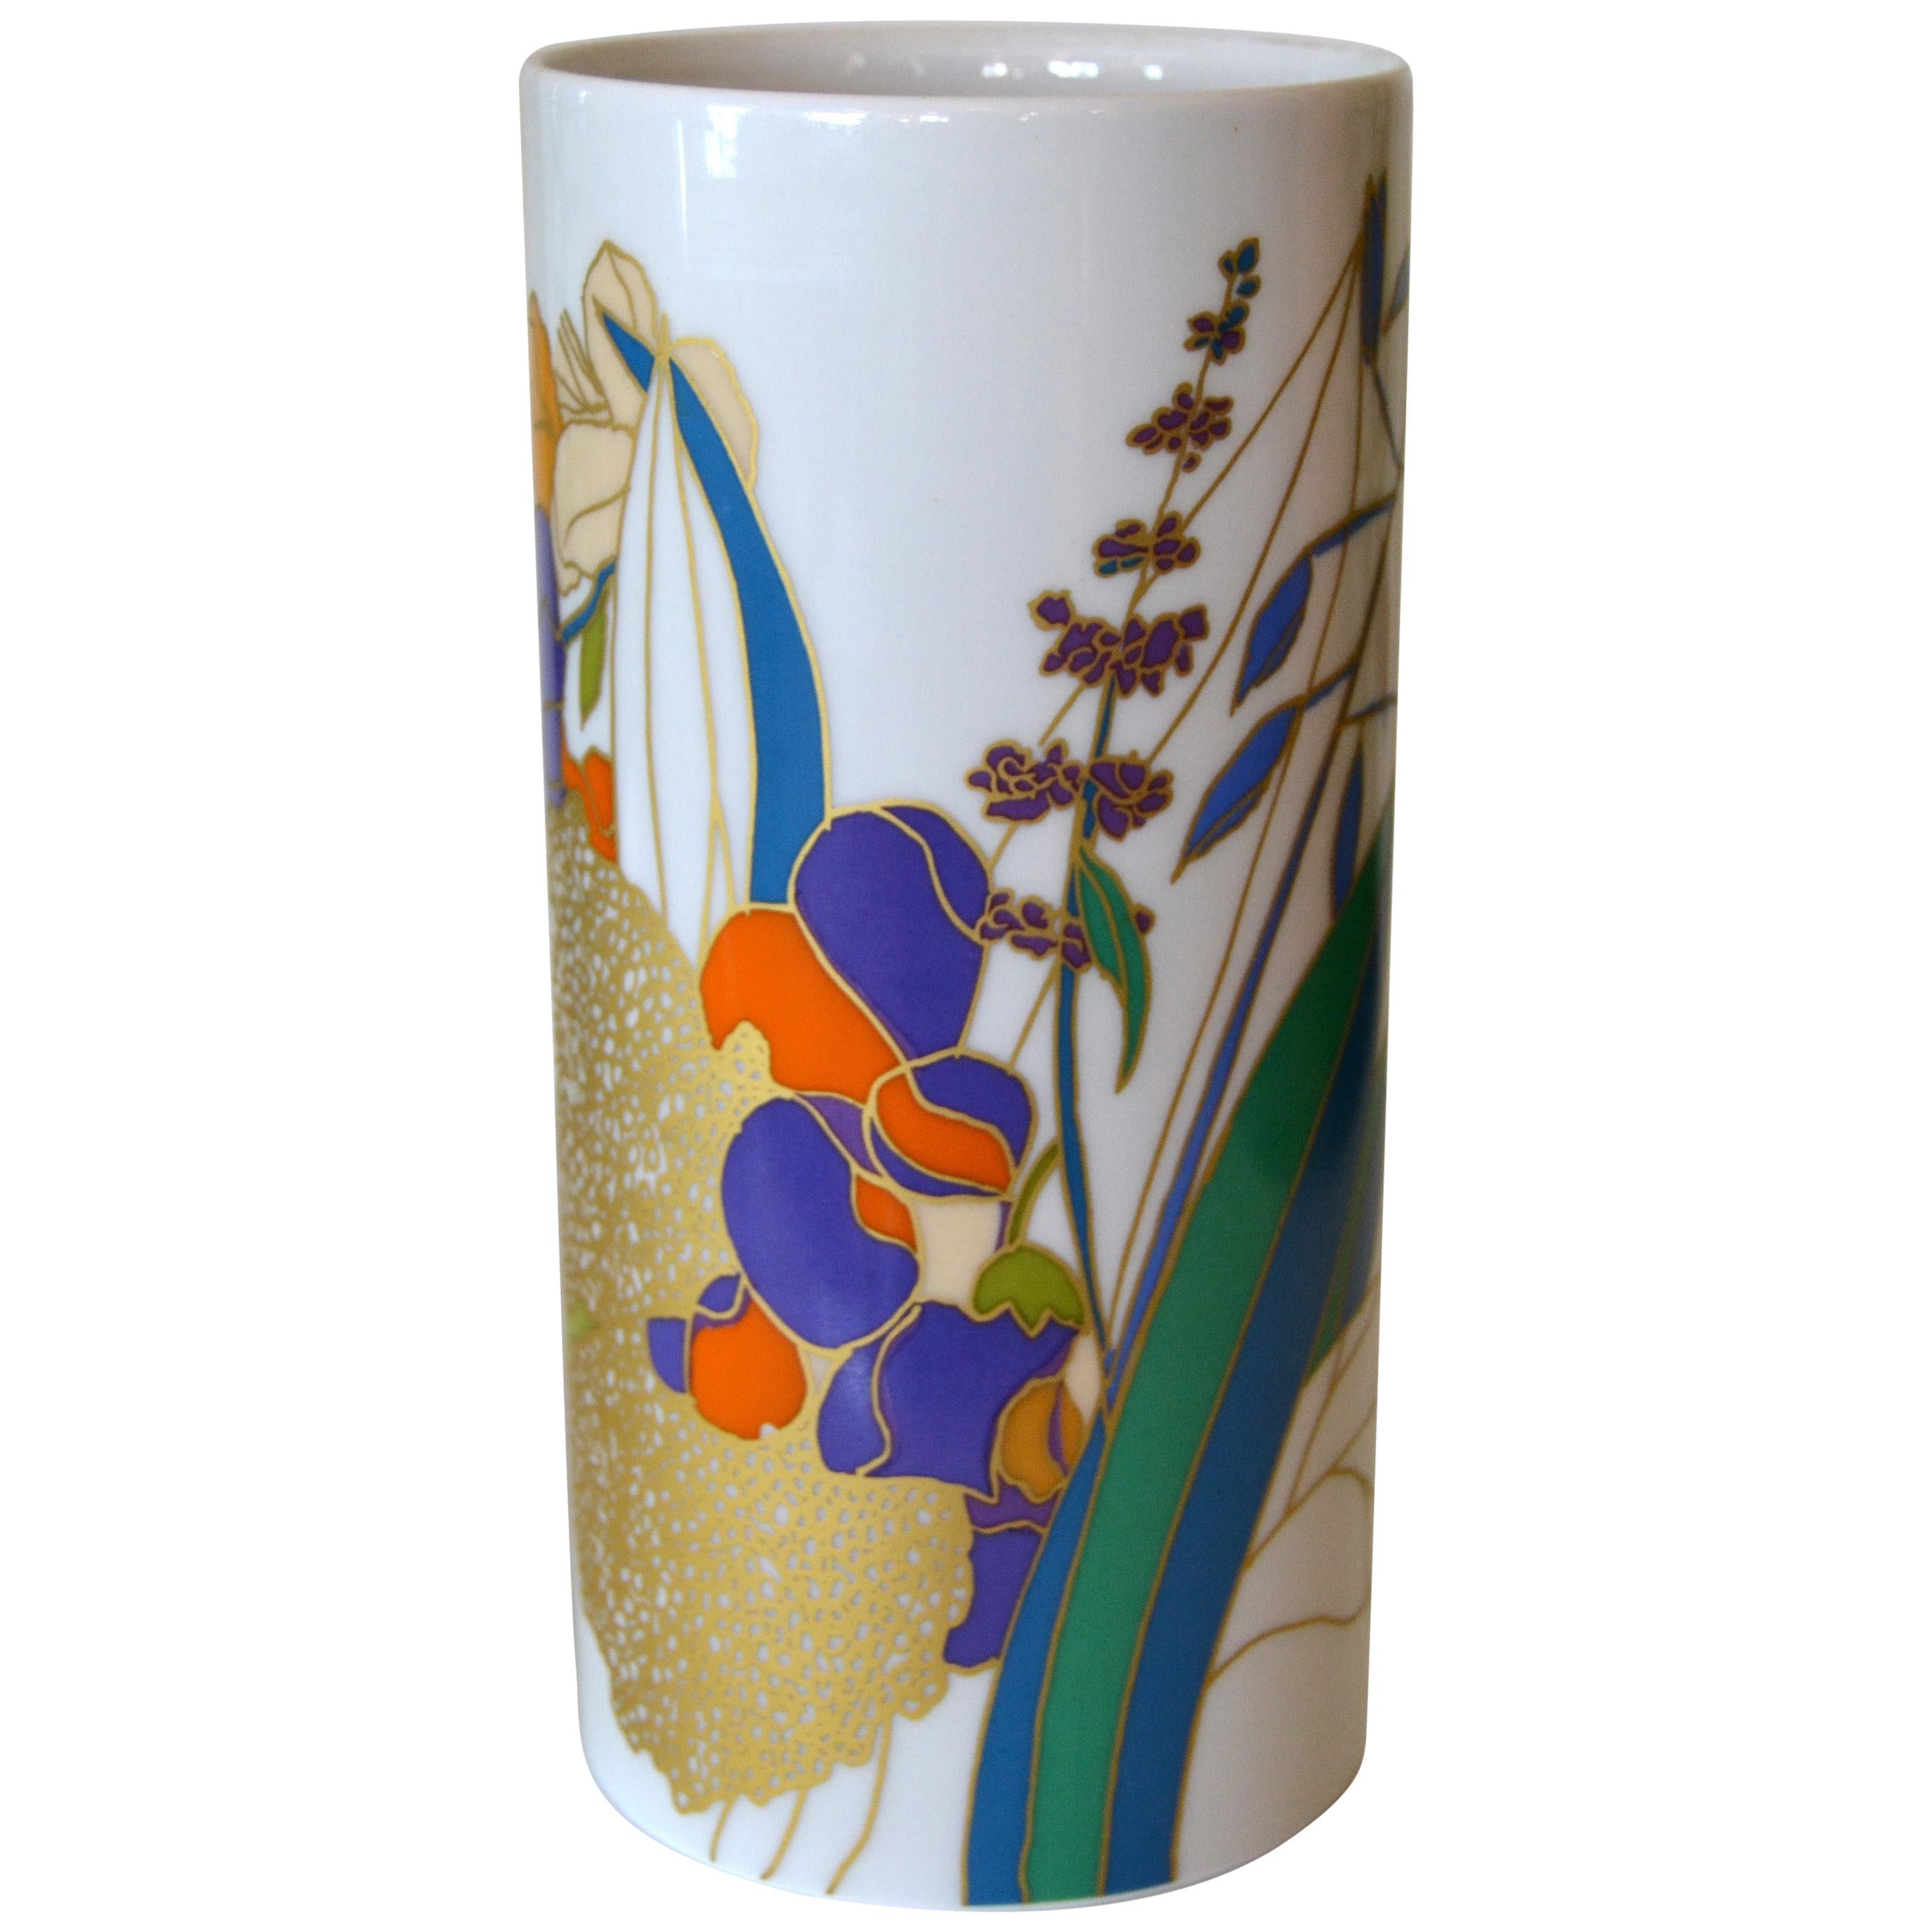 Original Rosenthal Porcelain Flower Vase Studio-Linie Germany by Wolfgang Bauer